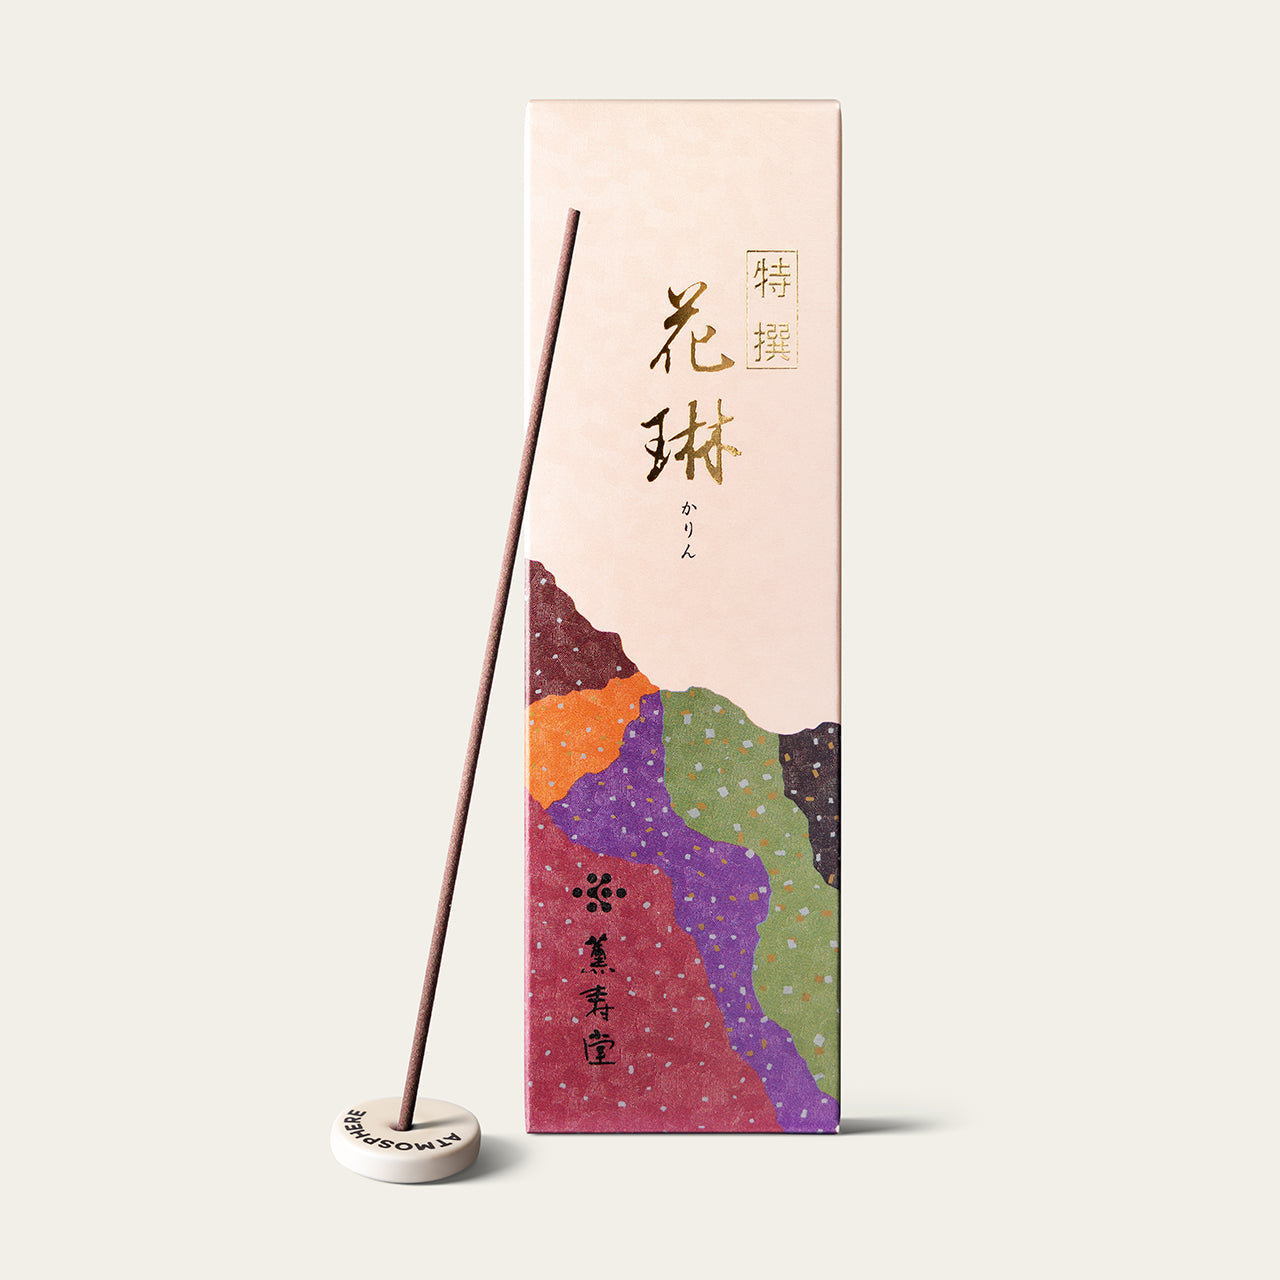 Kunjudo Karin Special Karin Tokusen Japanese incense sticks (80 sticks) with Atmosphere ceramic incense holder